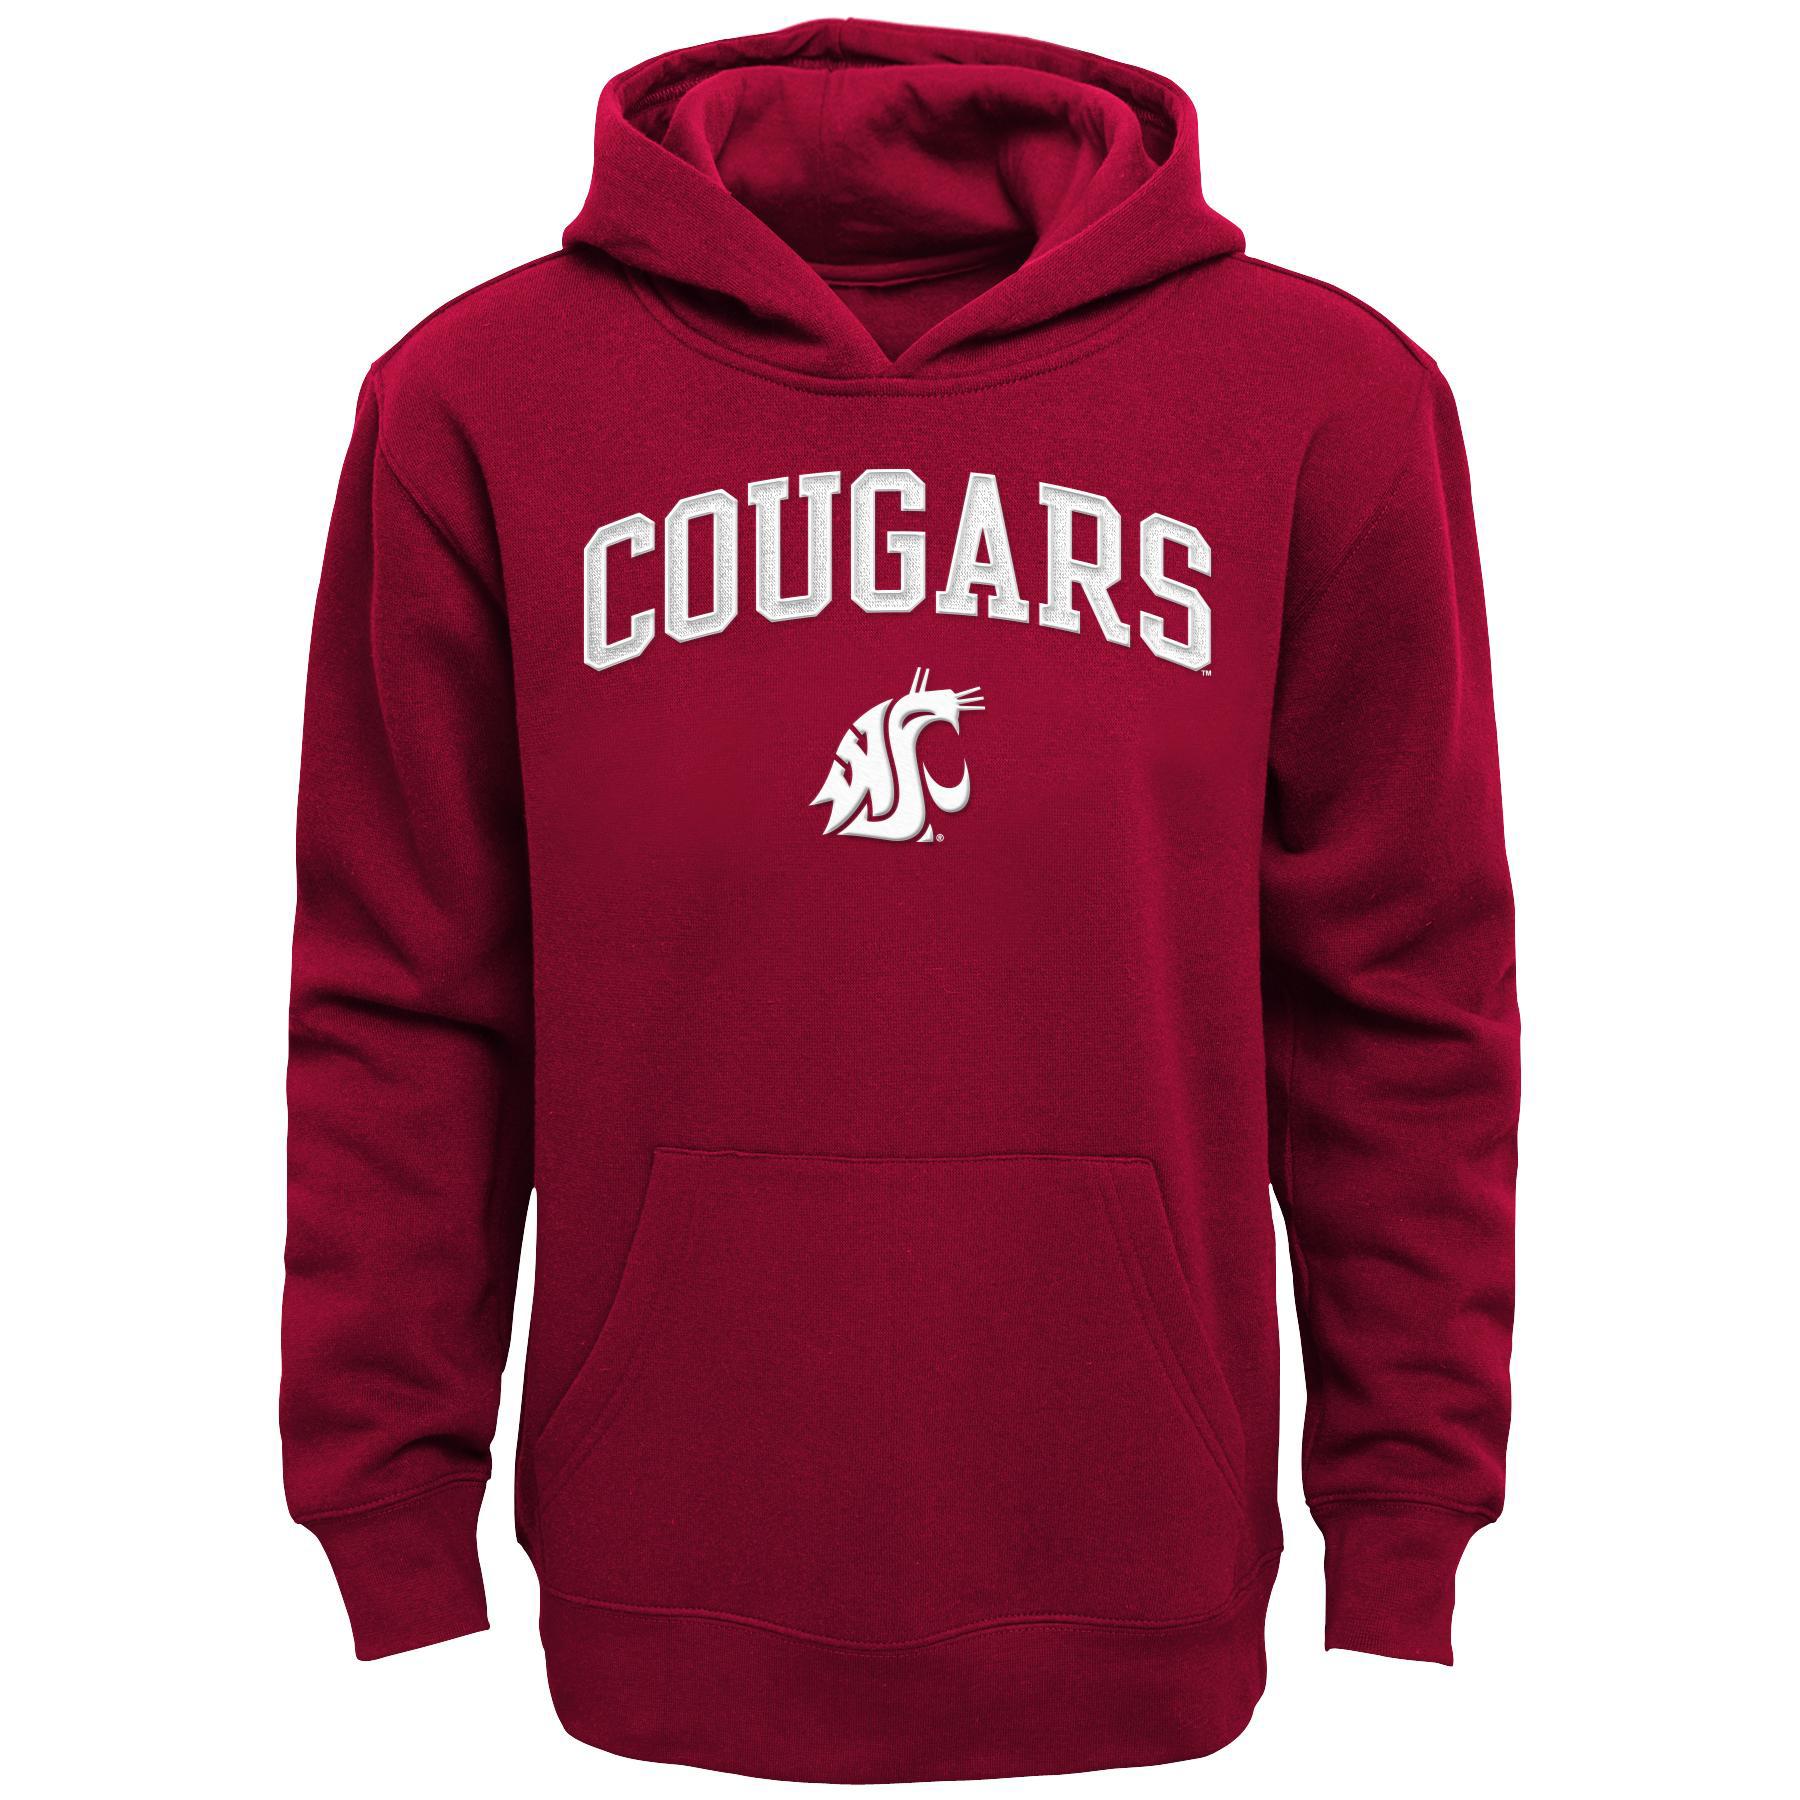 NCAA Boys' Hoodie - Washington State University Cougars